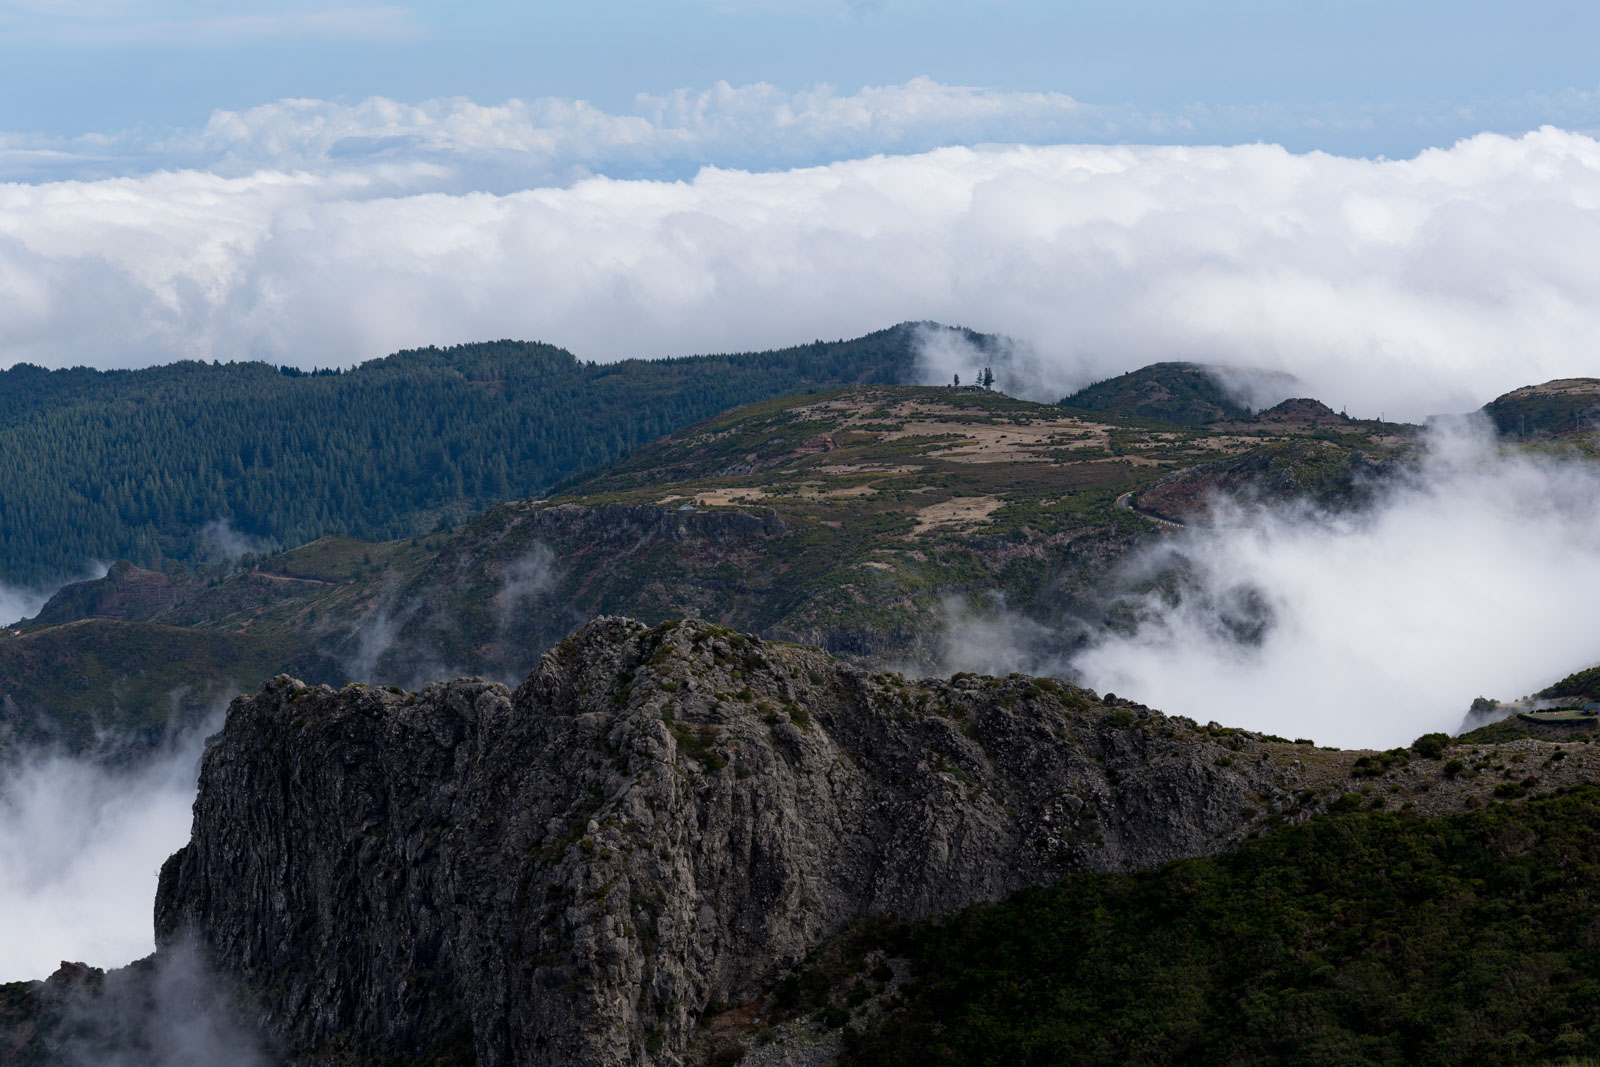 Navigating the mist towards clarity - Fog at Pico do Areeiro